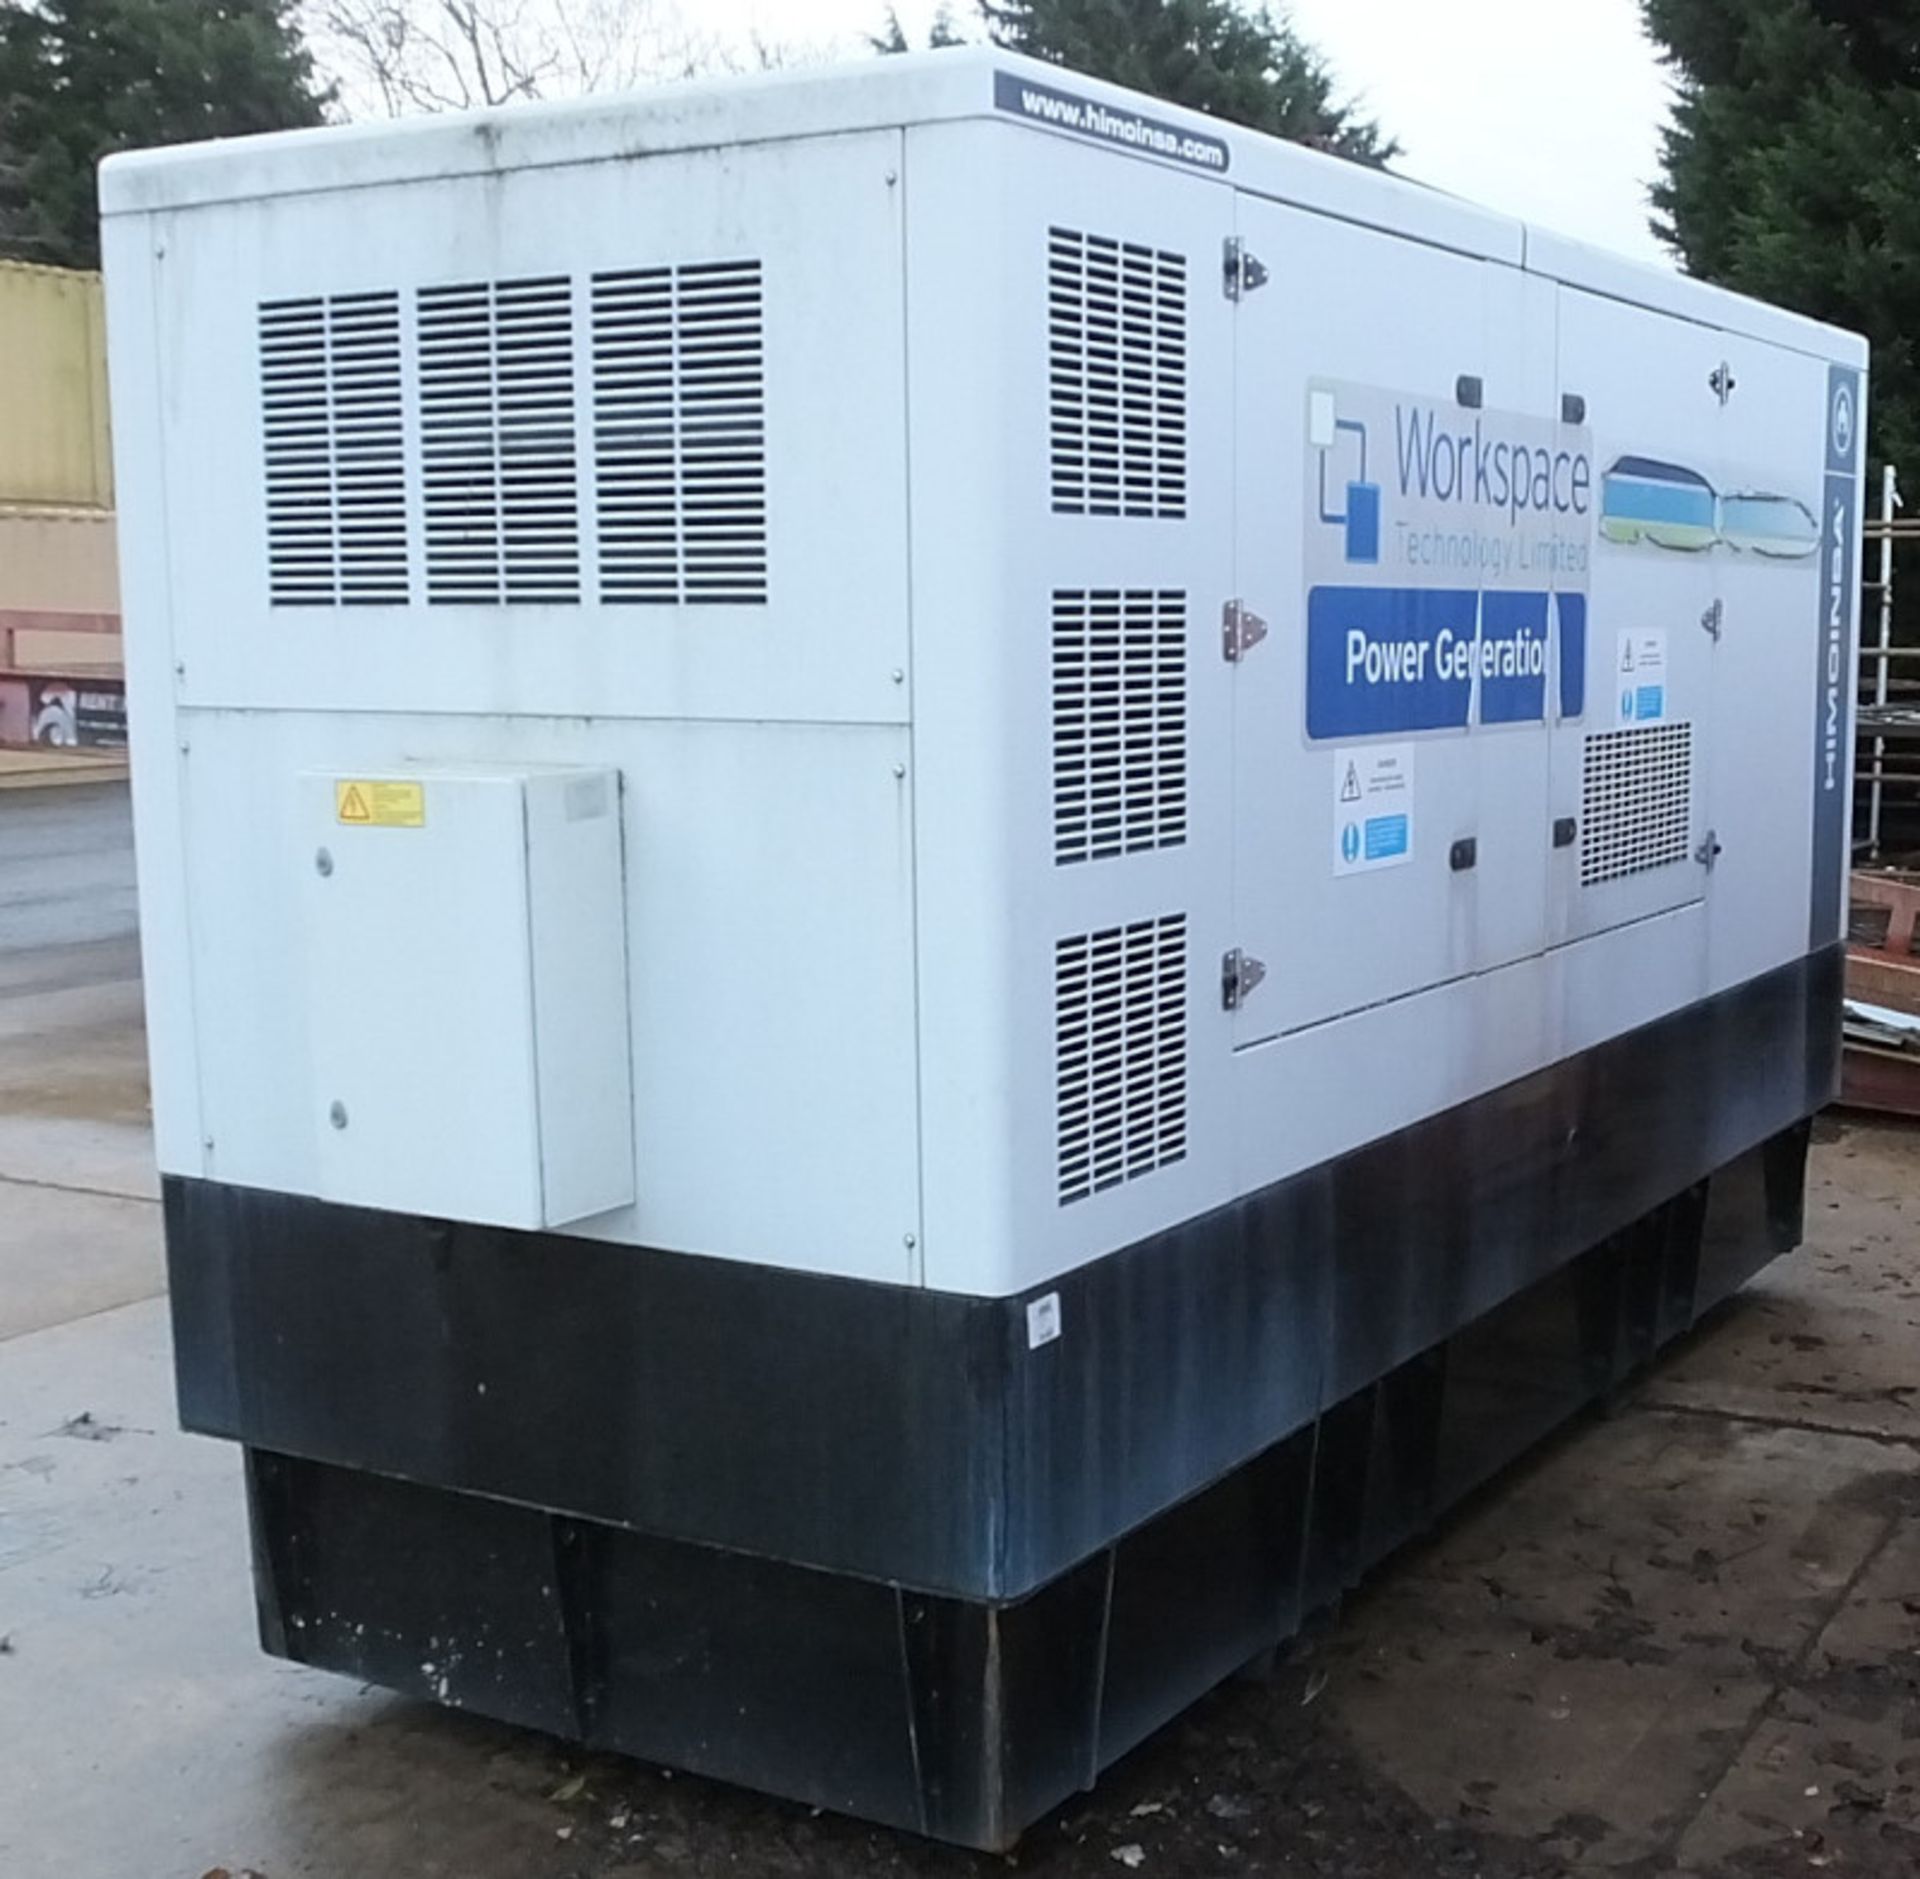 Himoinsa 400Kva generator - HFW-400 T5 INS 50Hz 400/230v -only 65 running hours! - Image 3 of 17